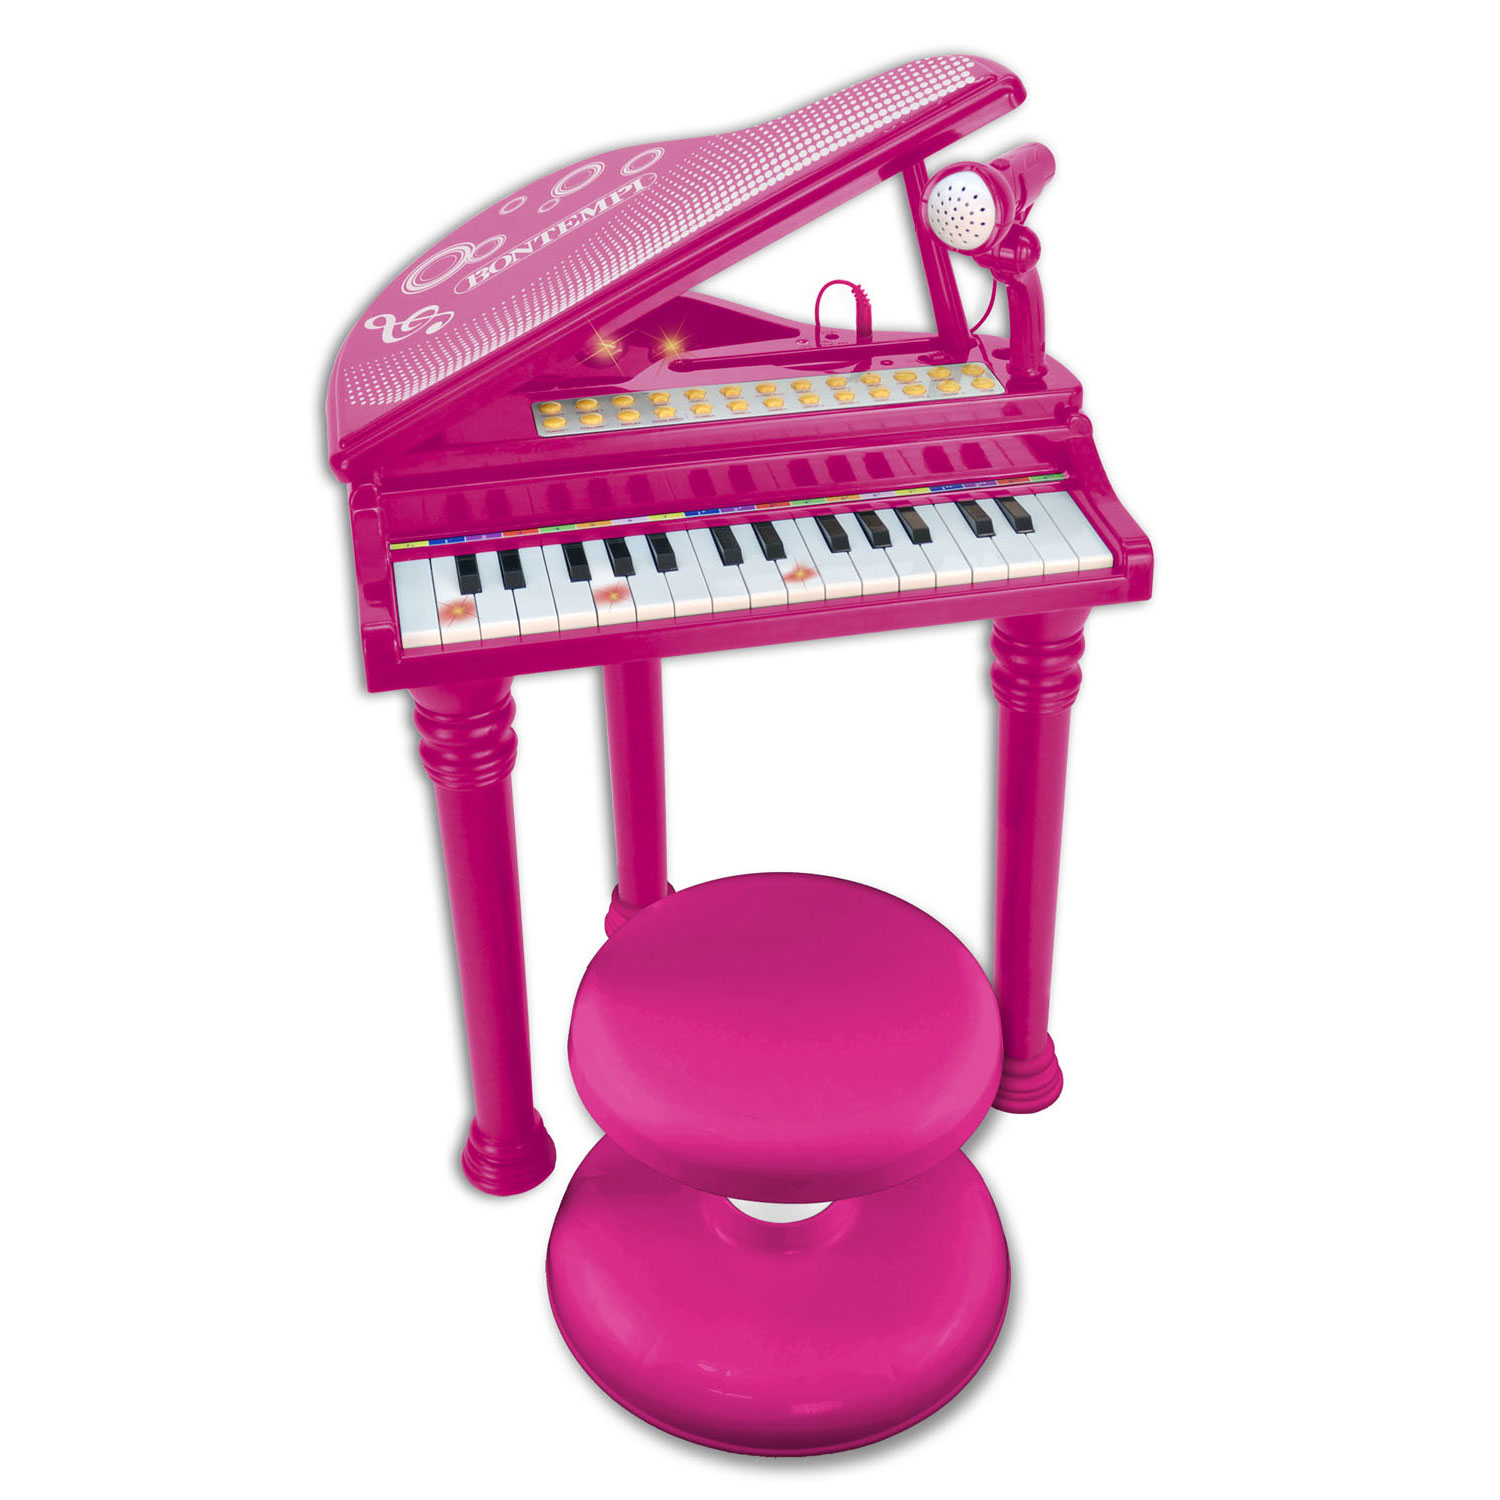 Demonstreer verband Barry Bontempi Piano met Microfoon en Krukje Roze | Thimble Toys